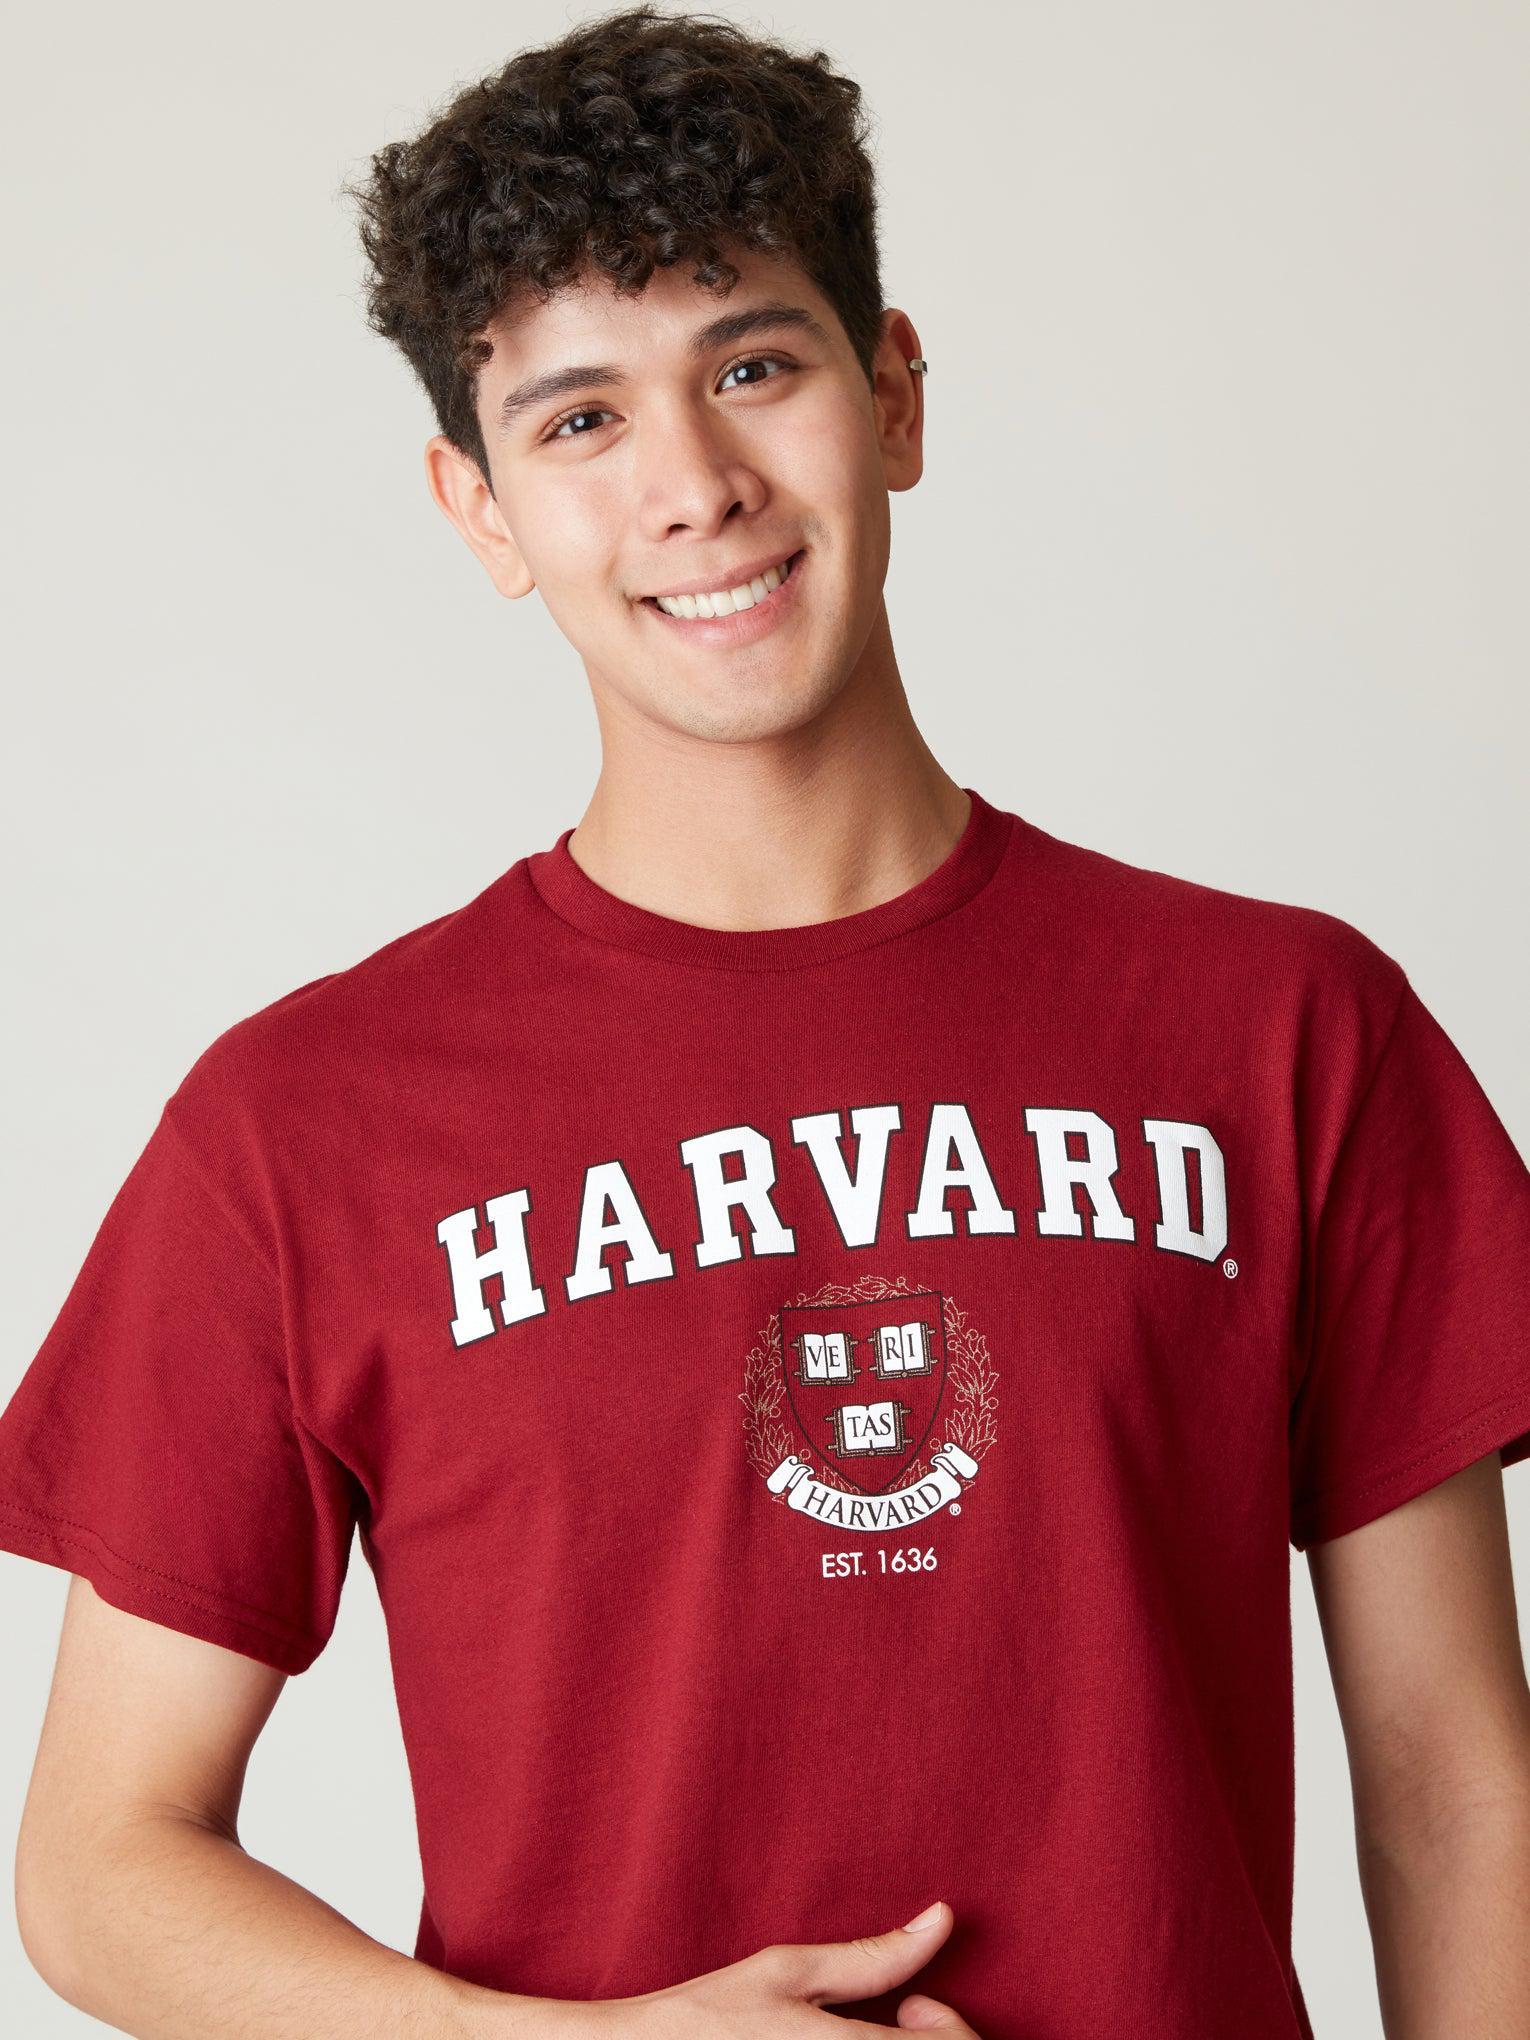 Harvard Shirt Hoodie Sweatshirt University T-Shirt Business Law Clothing Apparel